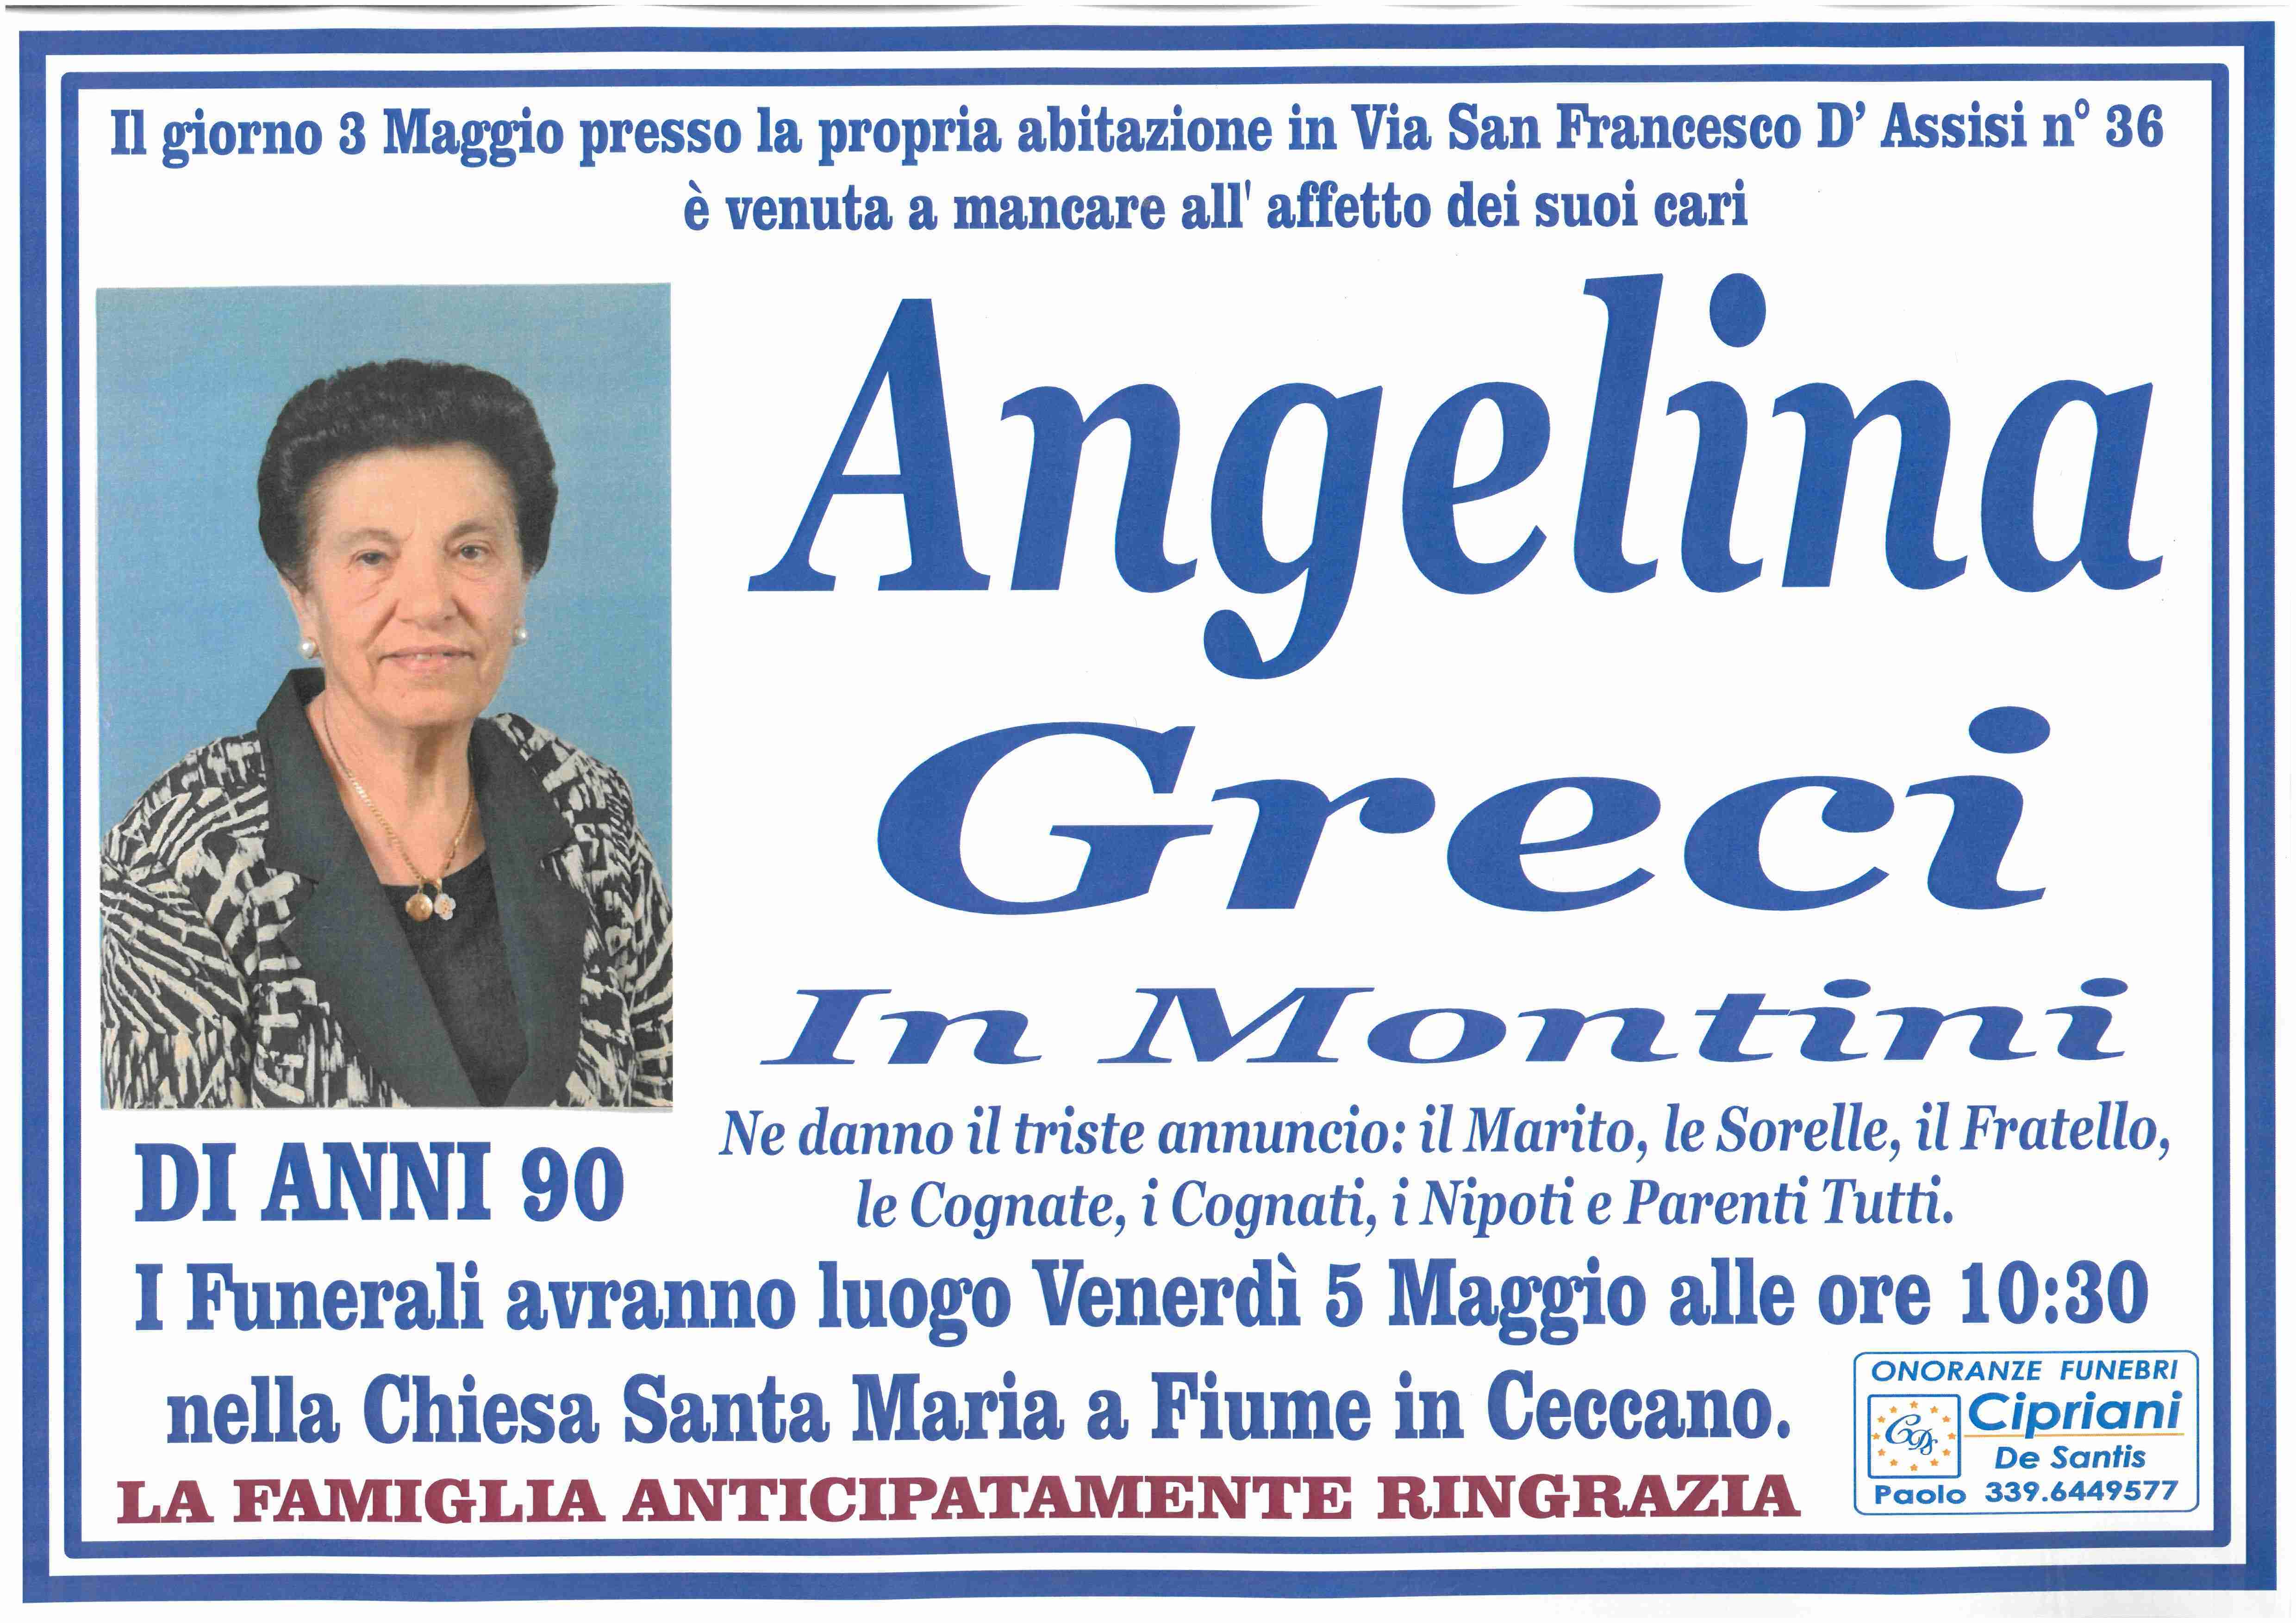 Angelina Greci